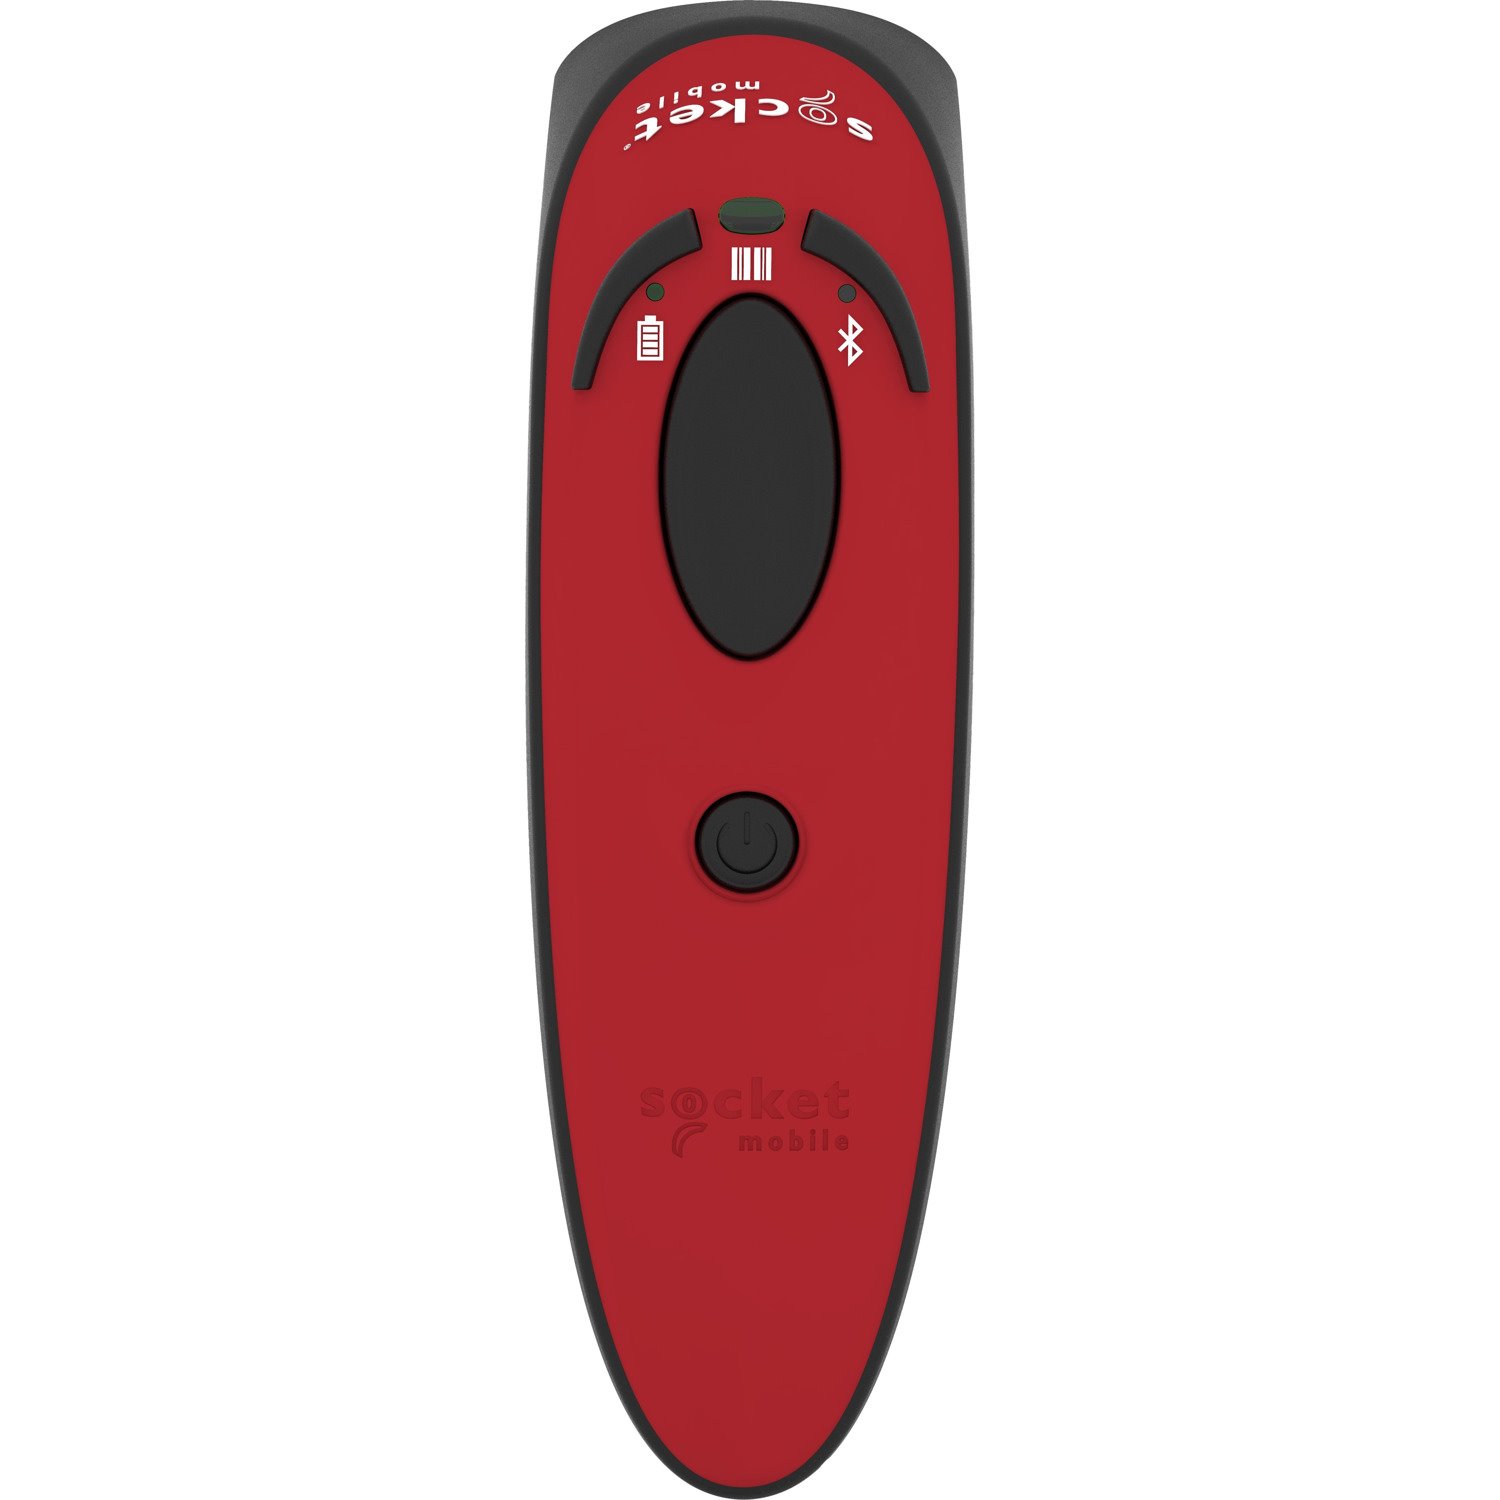 Socket Mobile DuraScan D700 Handheld Barcode Scanner - Wireless Connectivity - Grey